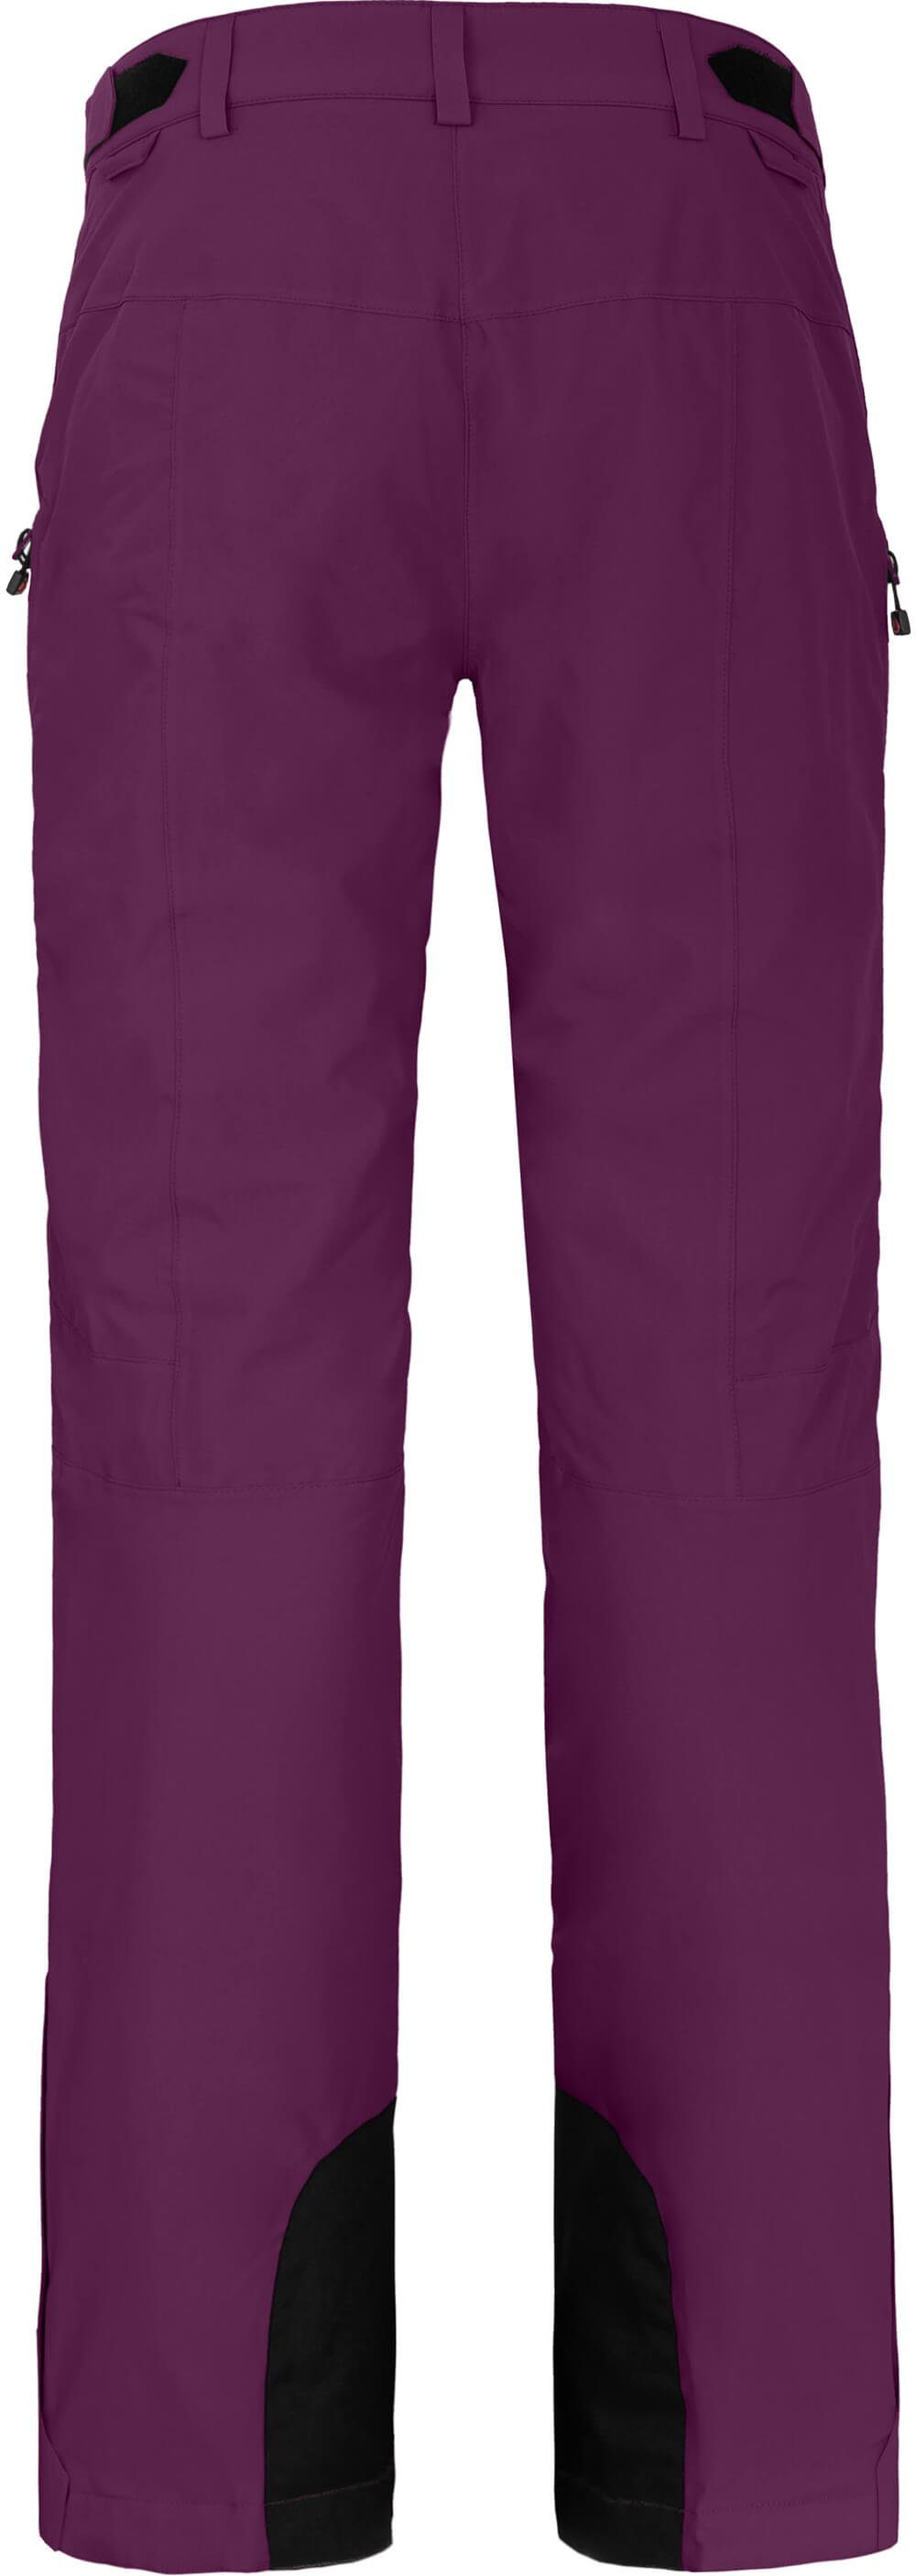 Bergson Skihose Skihose, violett Wassersäule, 20000 mm light unwattiert, Kurzgrößen, Damen dunkel ICE